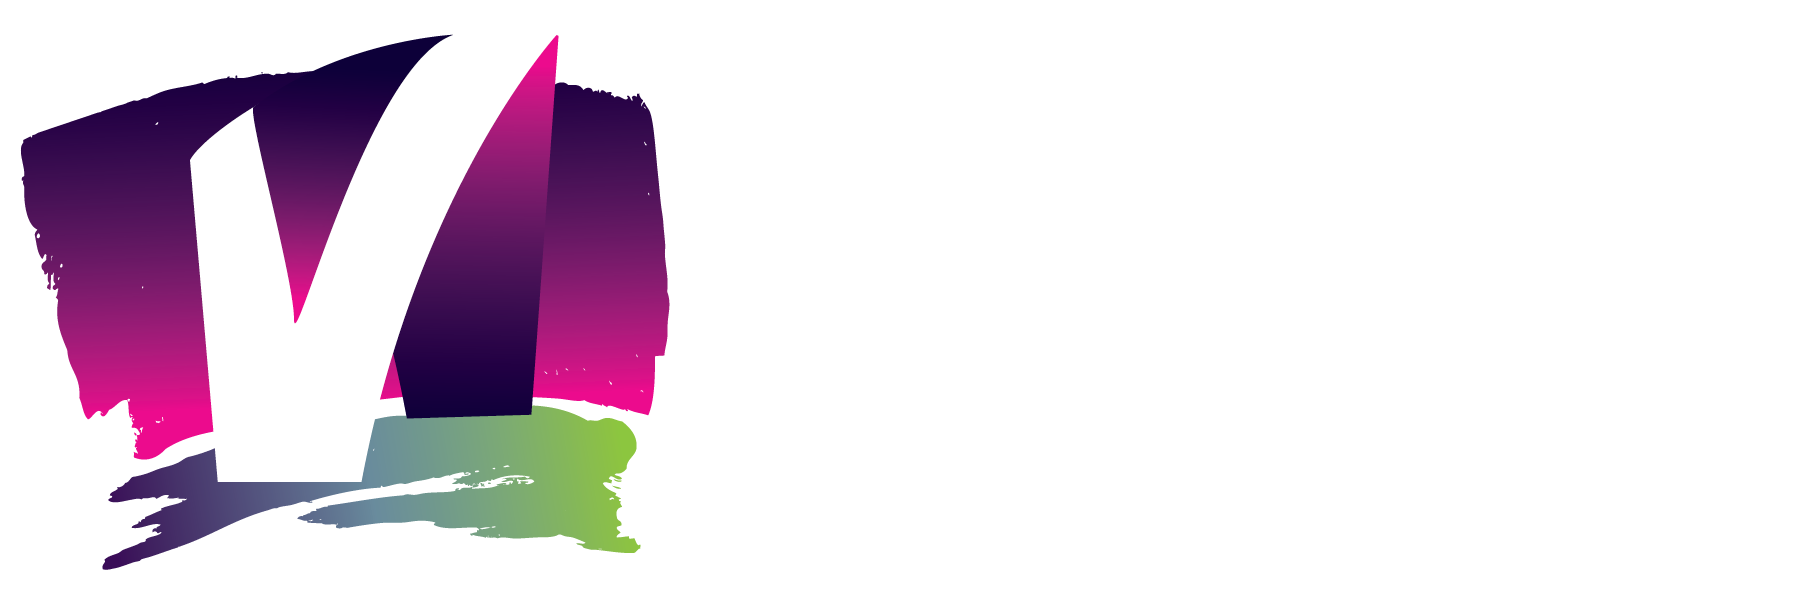 violet crown amphitheater logo